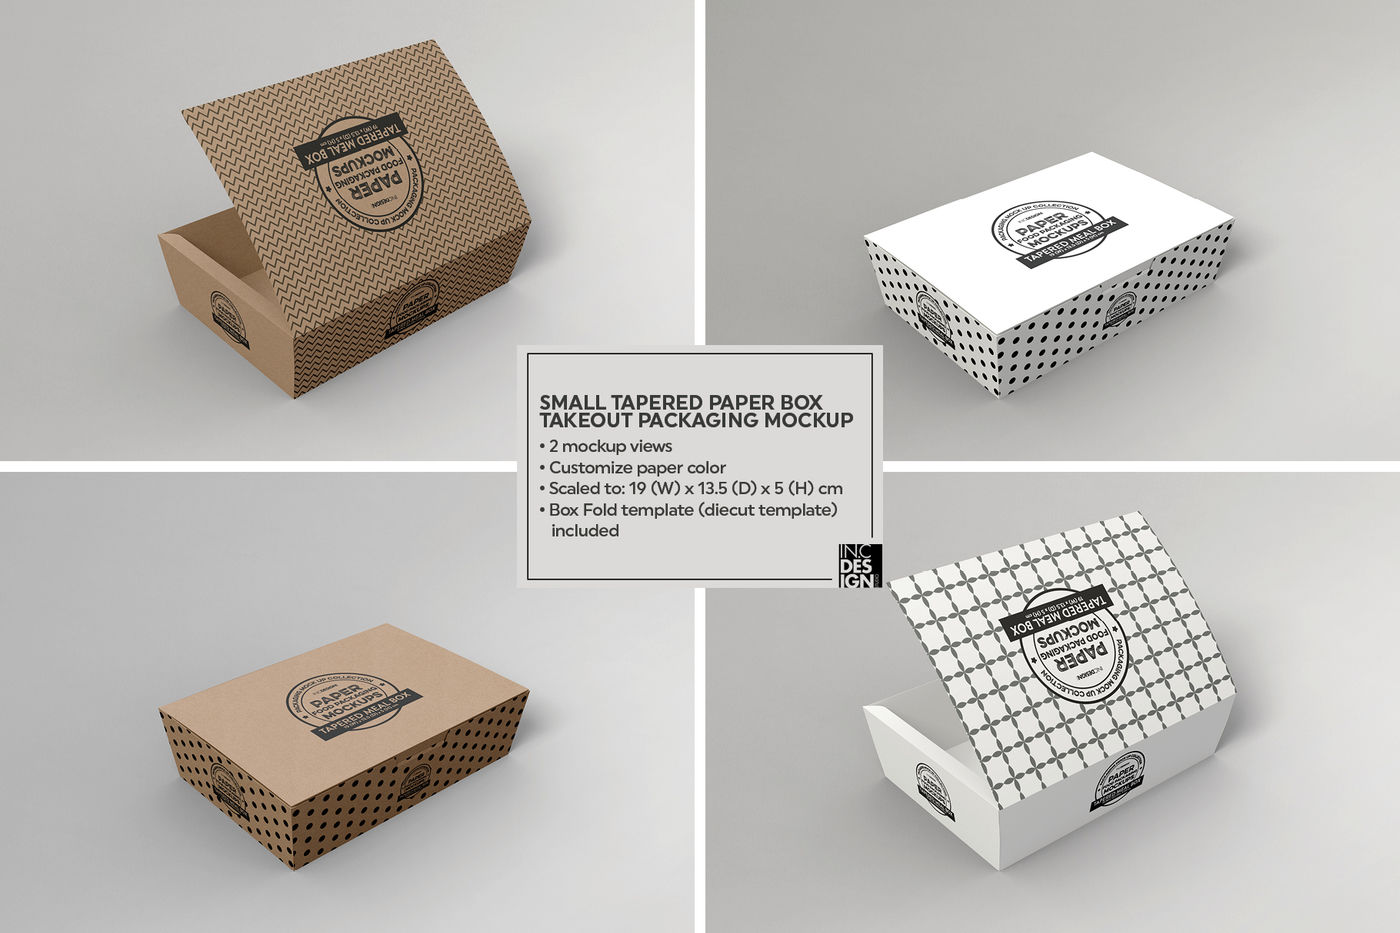 Download Vol 13: Paper Food Box Packaging Mockups By INC Design Studio | TheHungryJPEG.com